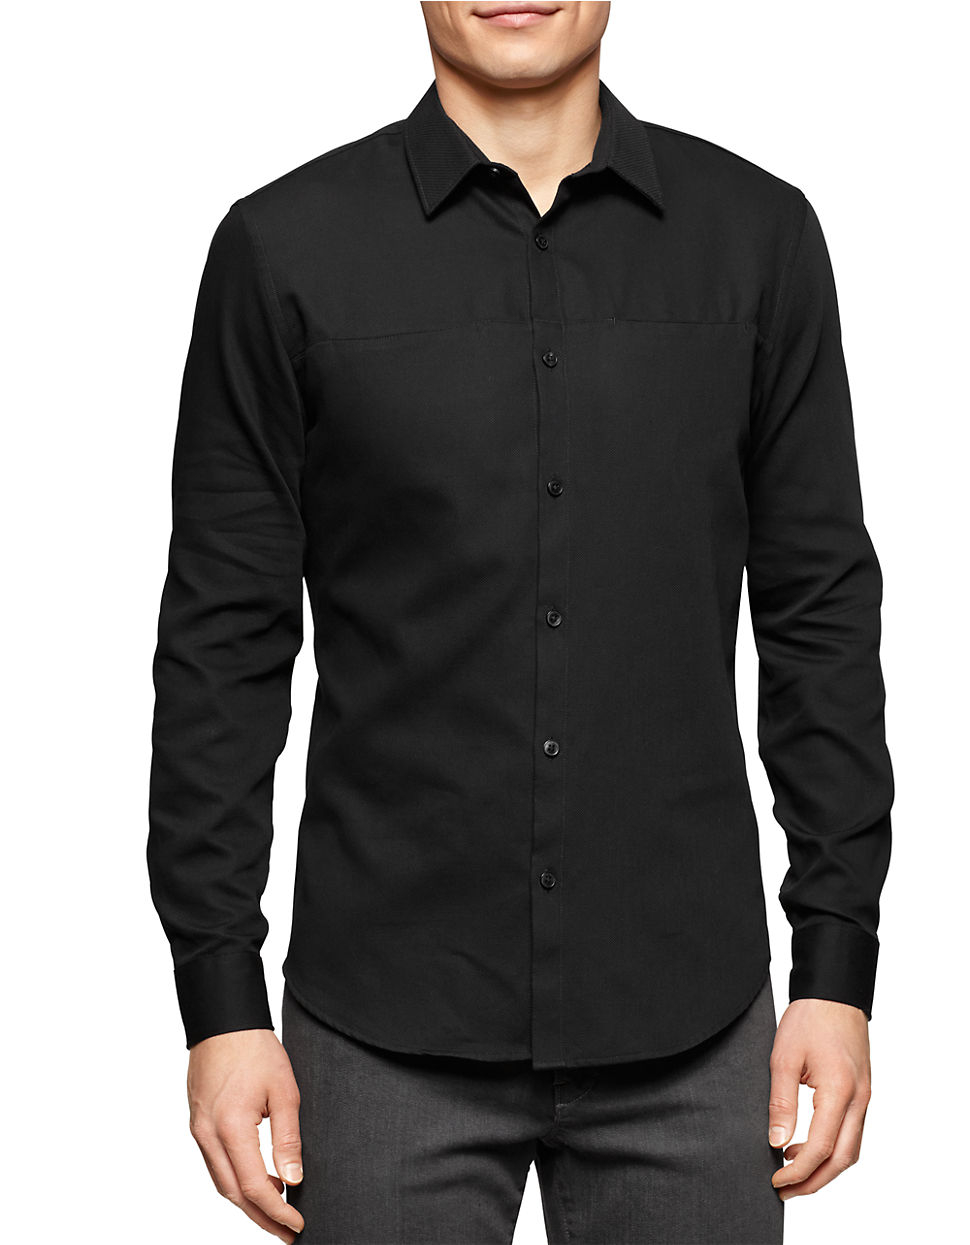 Lyst - Calvin Klein Long-Sleeve Button-Down Shirt in Black for Men